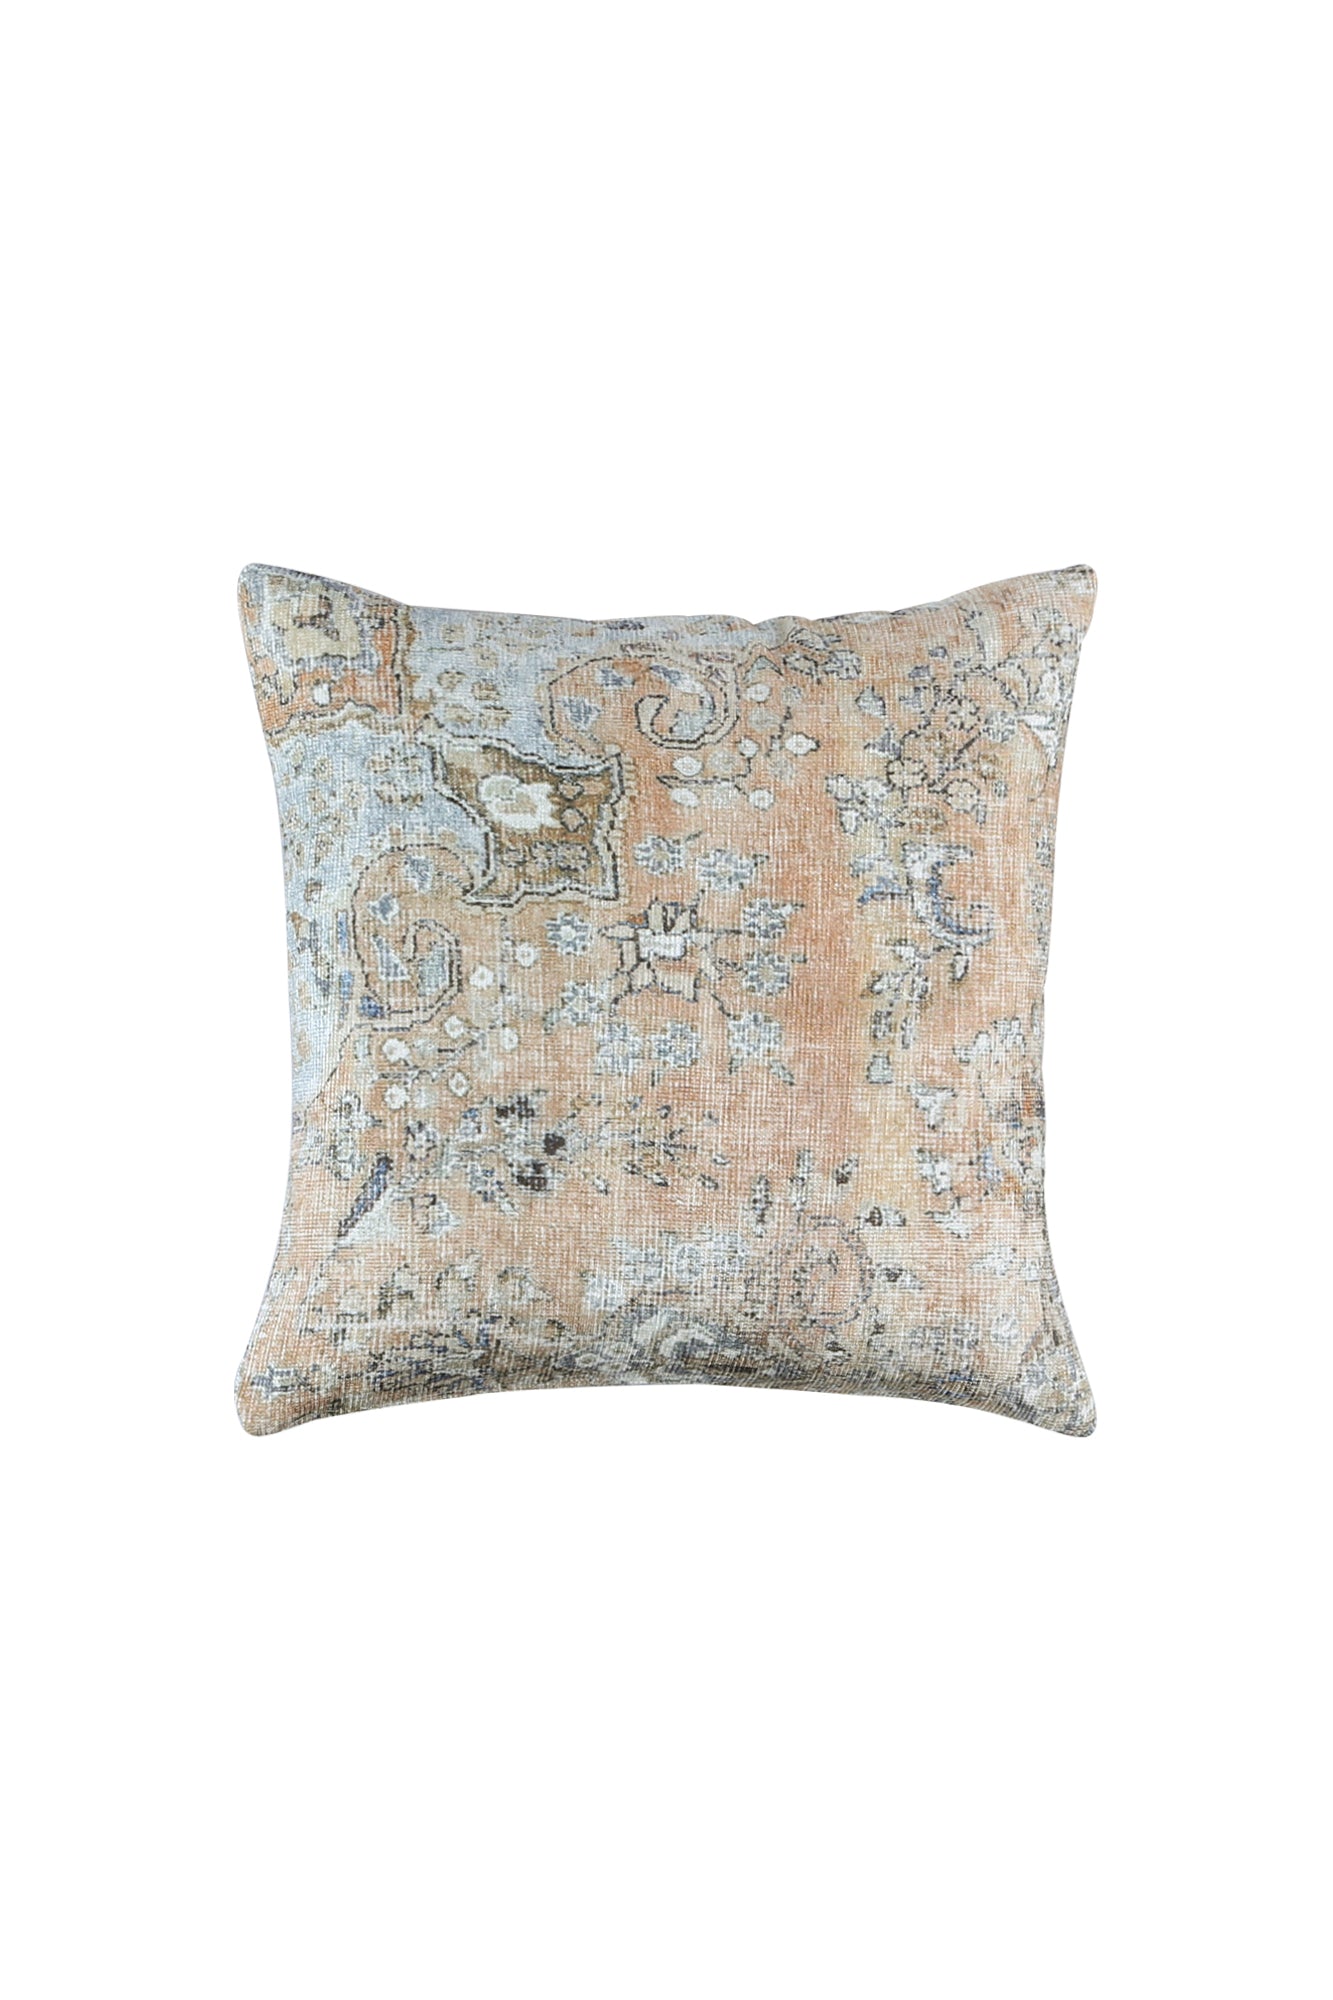 Distressed Vintage Oxus Desert Pillow main